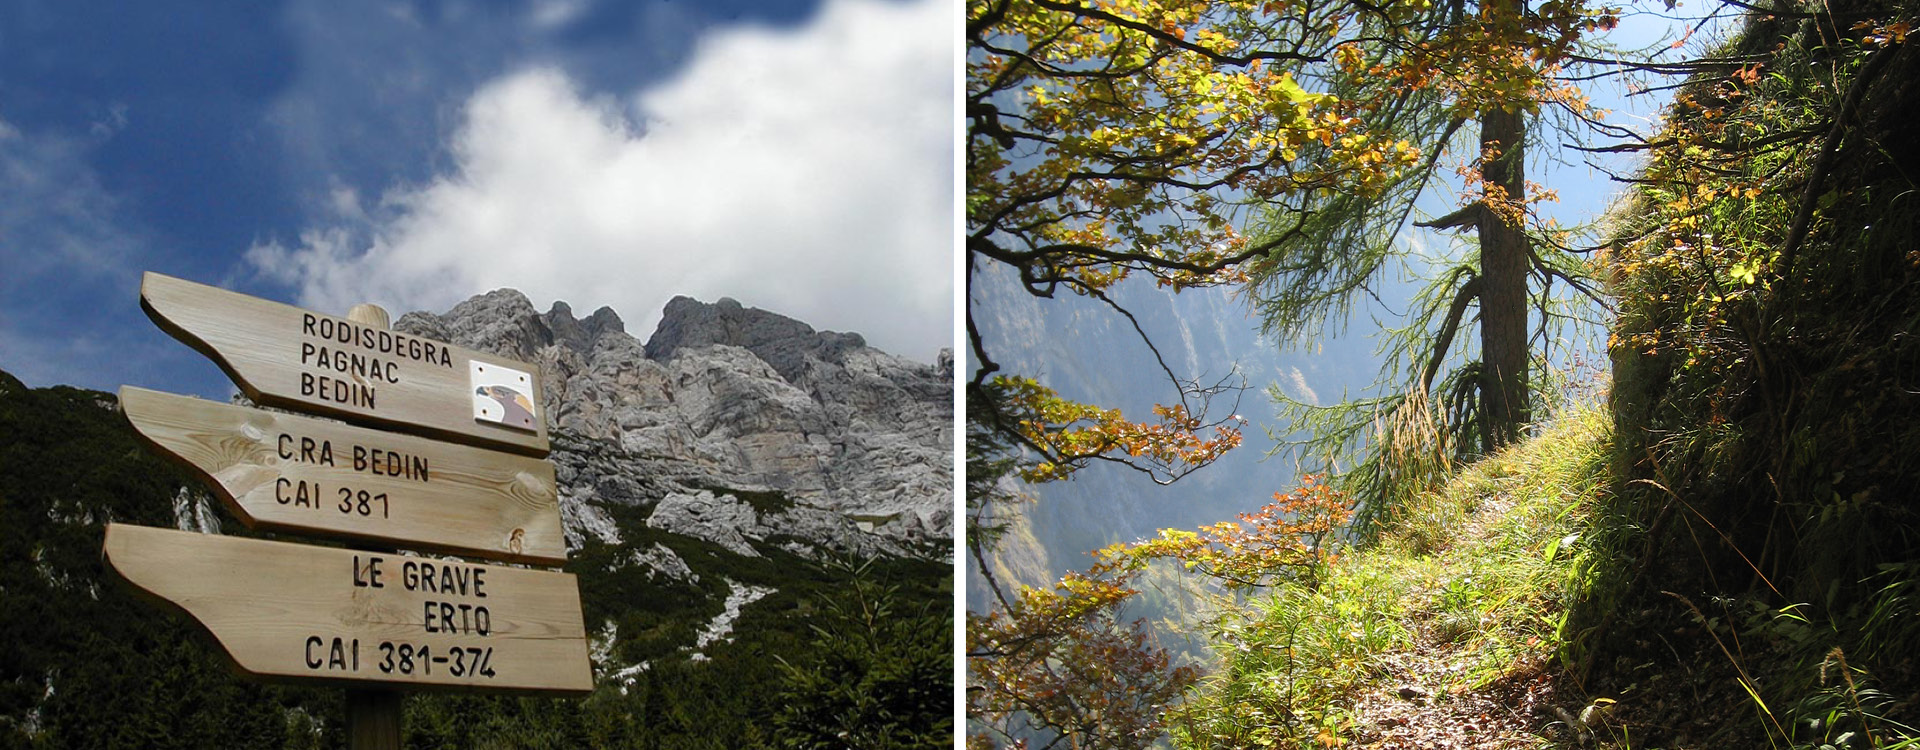 Parco Naturale Dolomiti Friulane